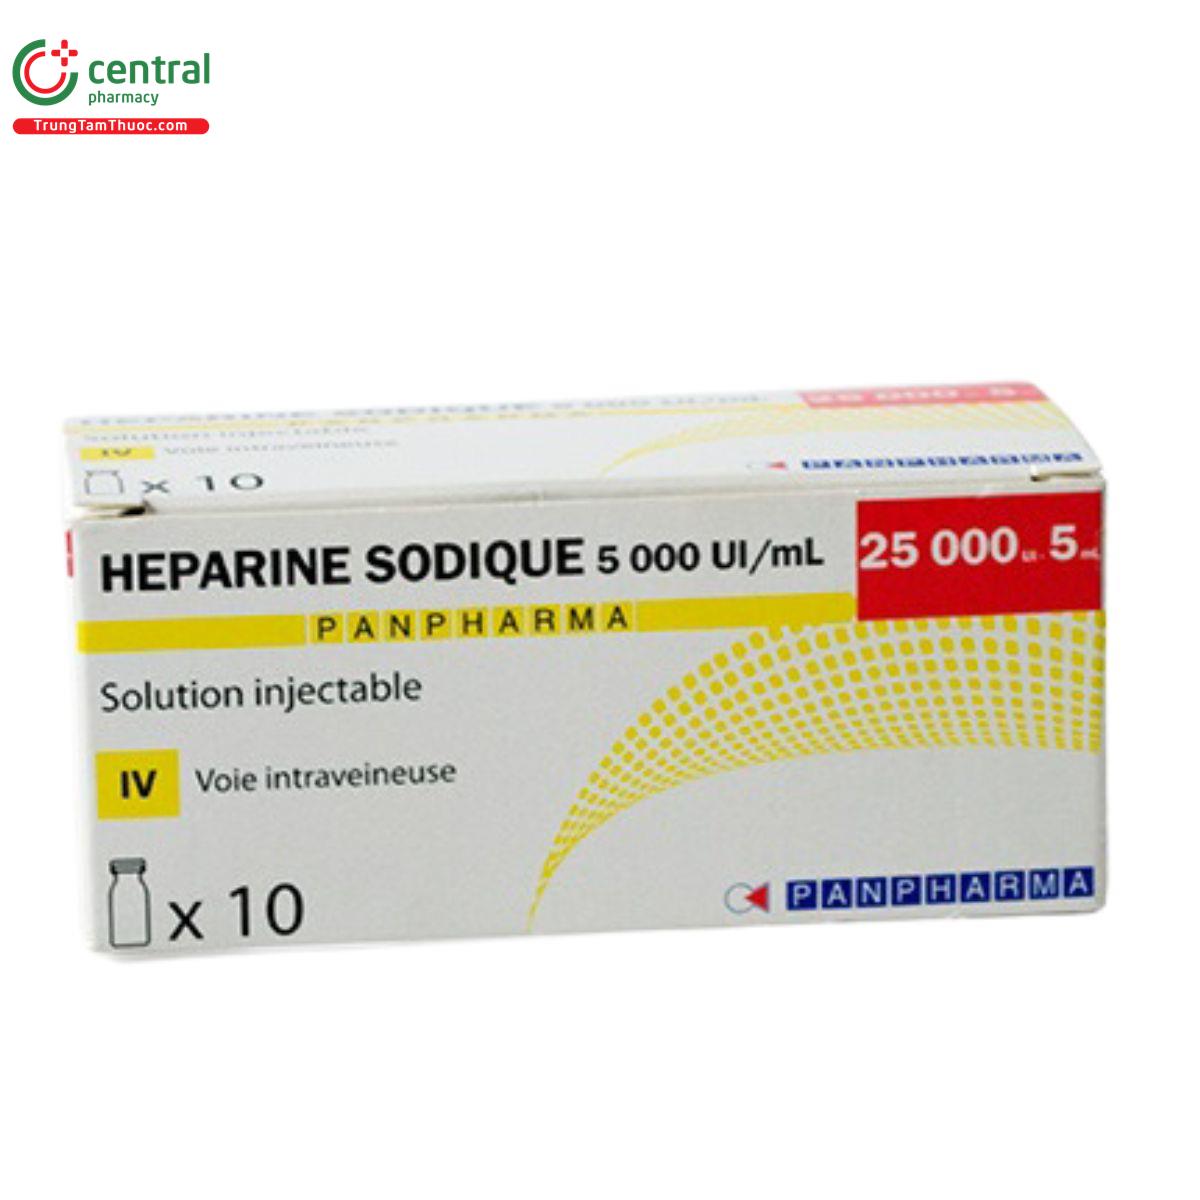 heparine sodique 5000uiml panpharma 5 I3731